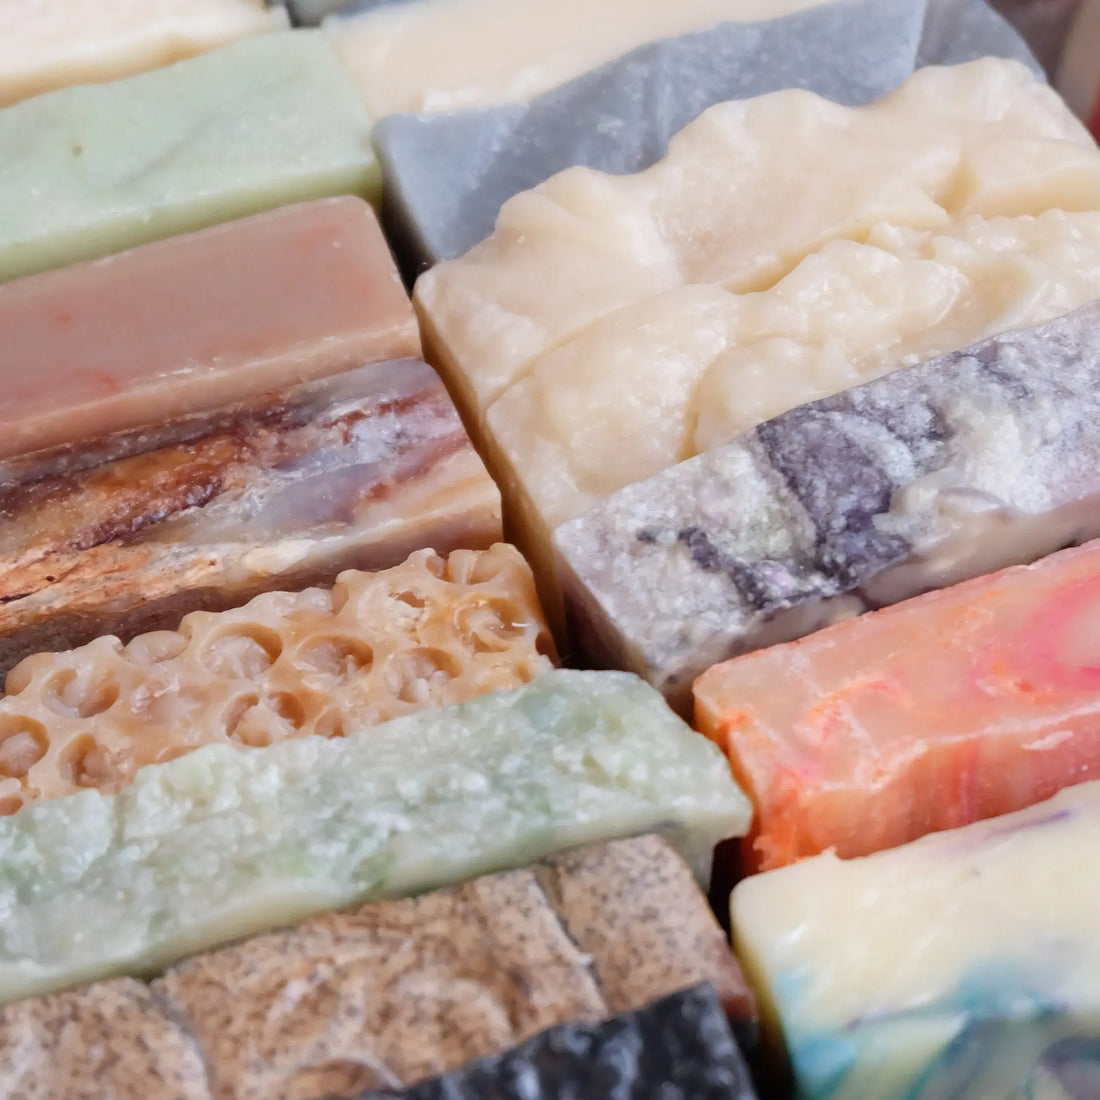 15 Reasons Why You Should Use Natural Soap